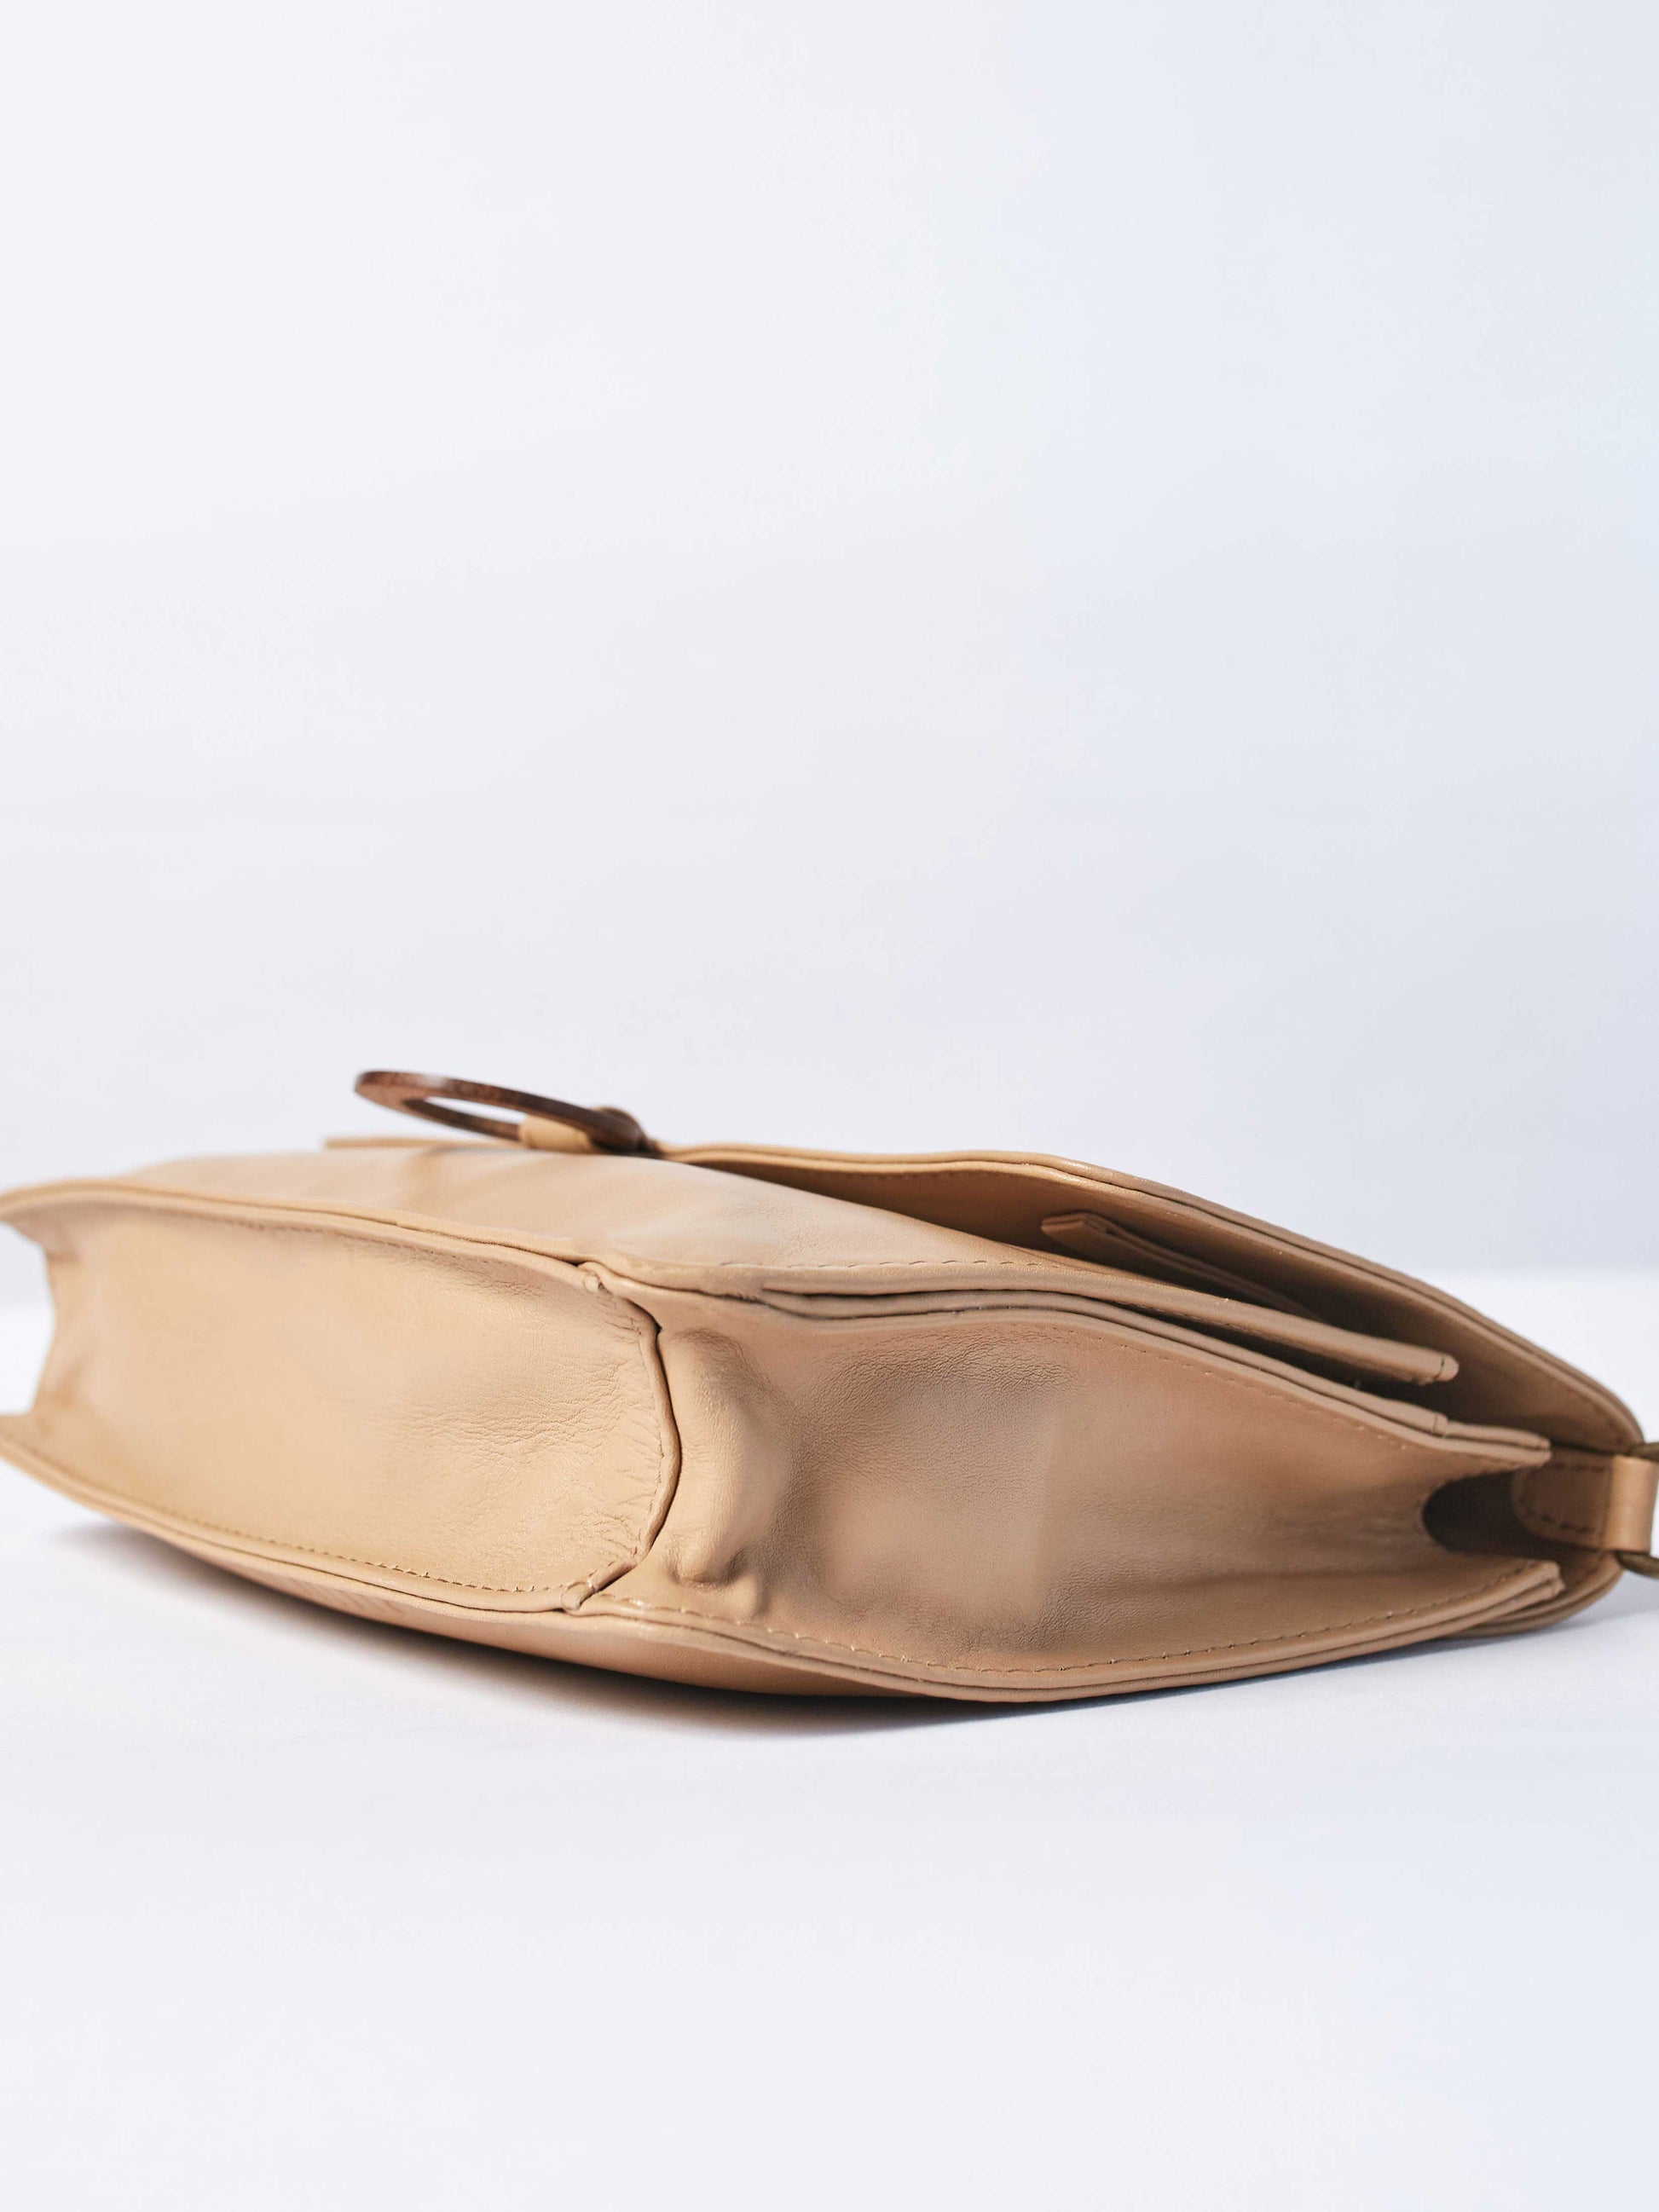 Leather-wallet crossbody bag - Wood Wallet Crossbody cappuccino color handbags by payton james Nashville leather handbag designer